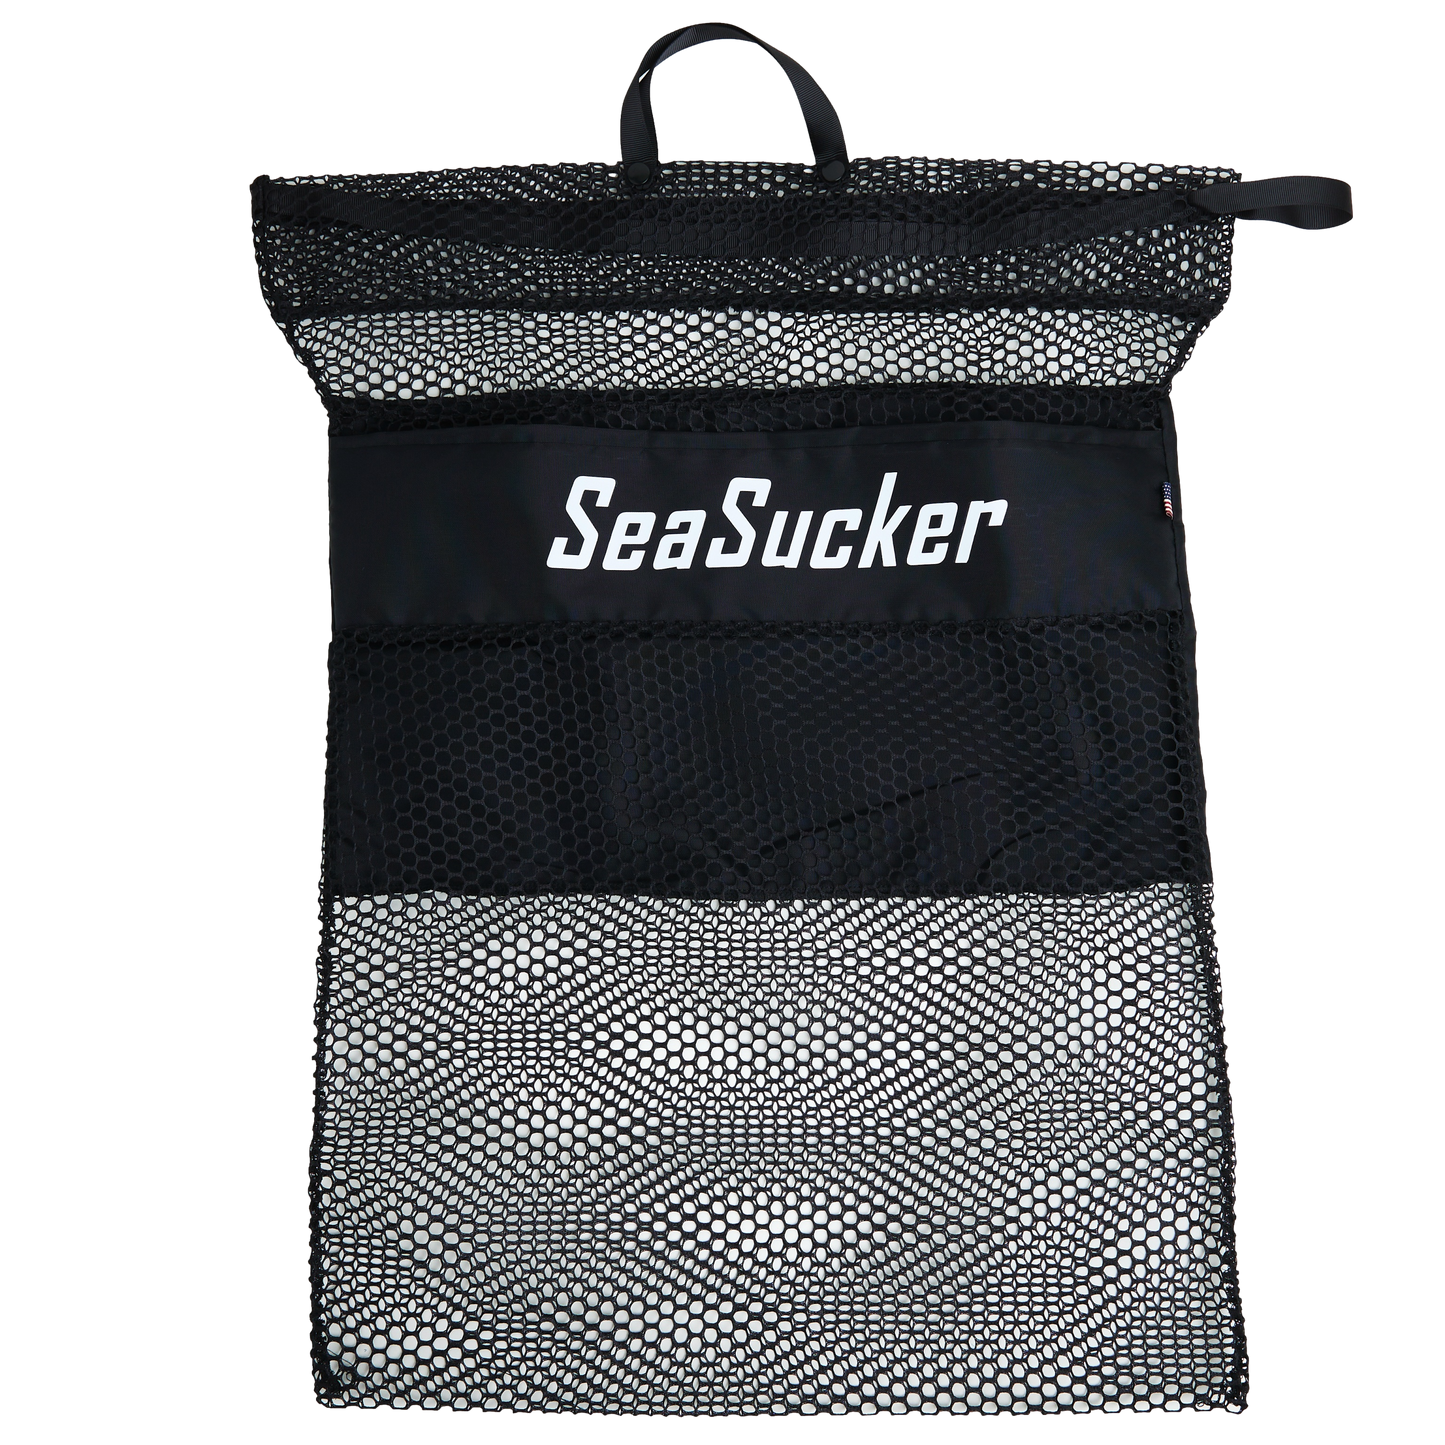 SeaSucker Recycle Tote